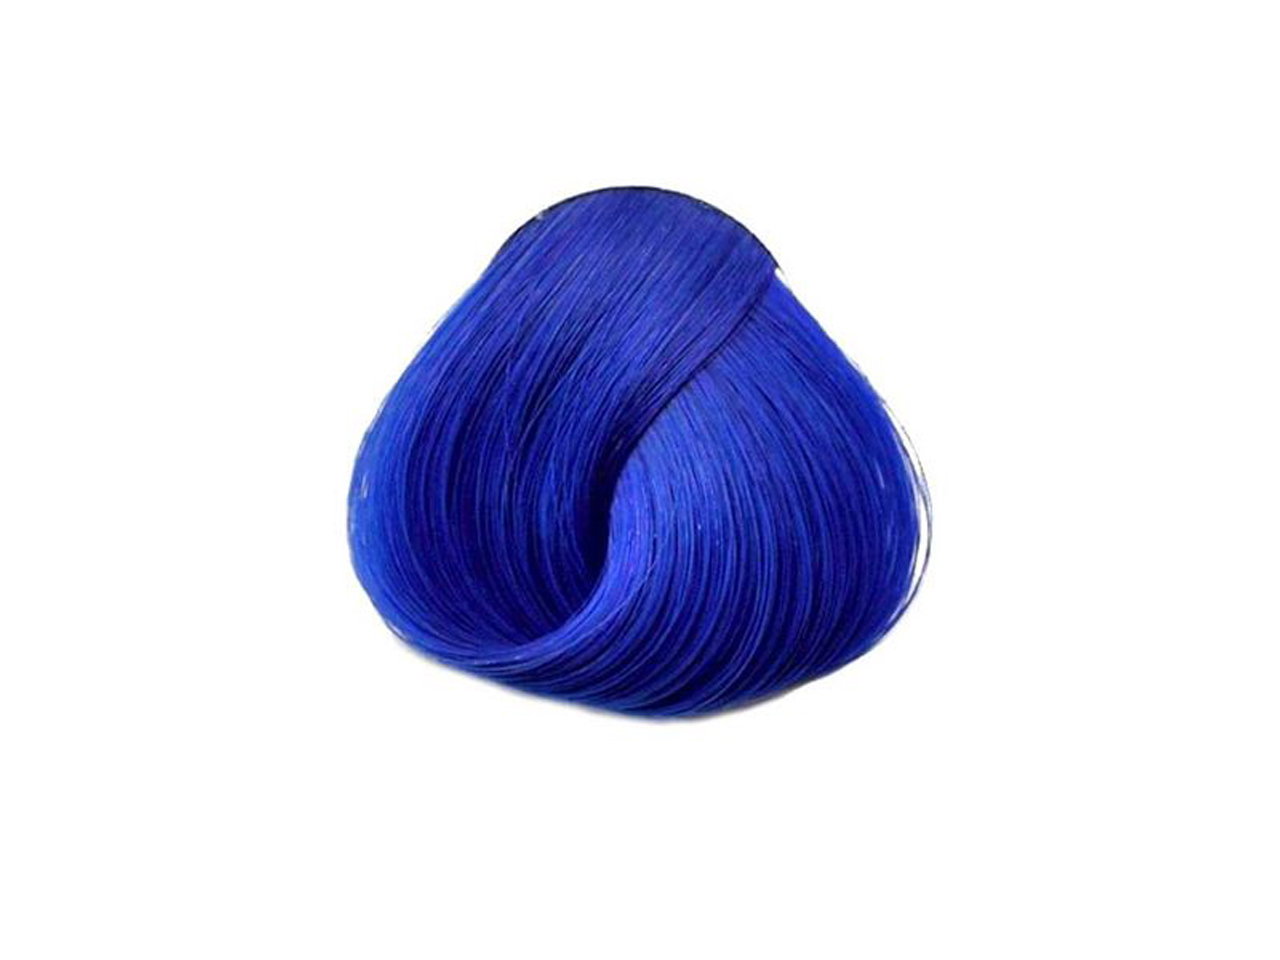 7. Punky Colour Atlantic Blue Hair Dye - wide 7